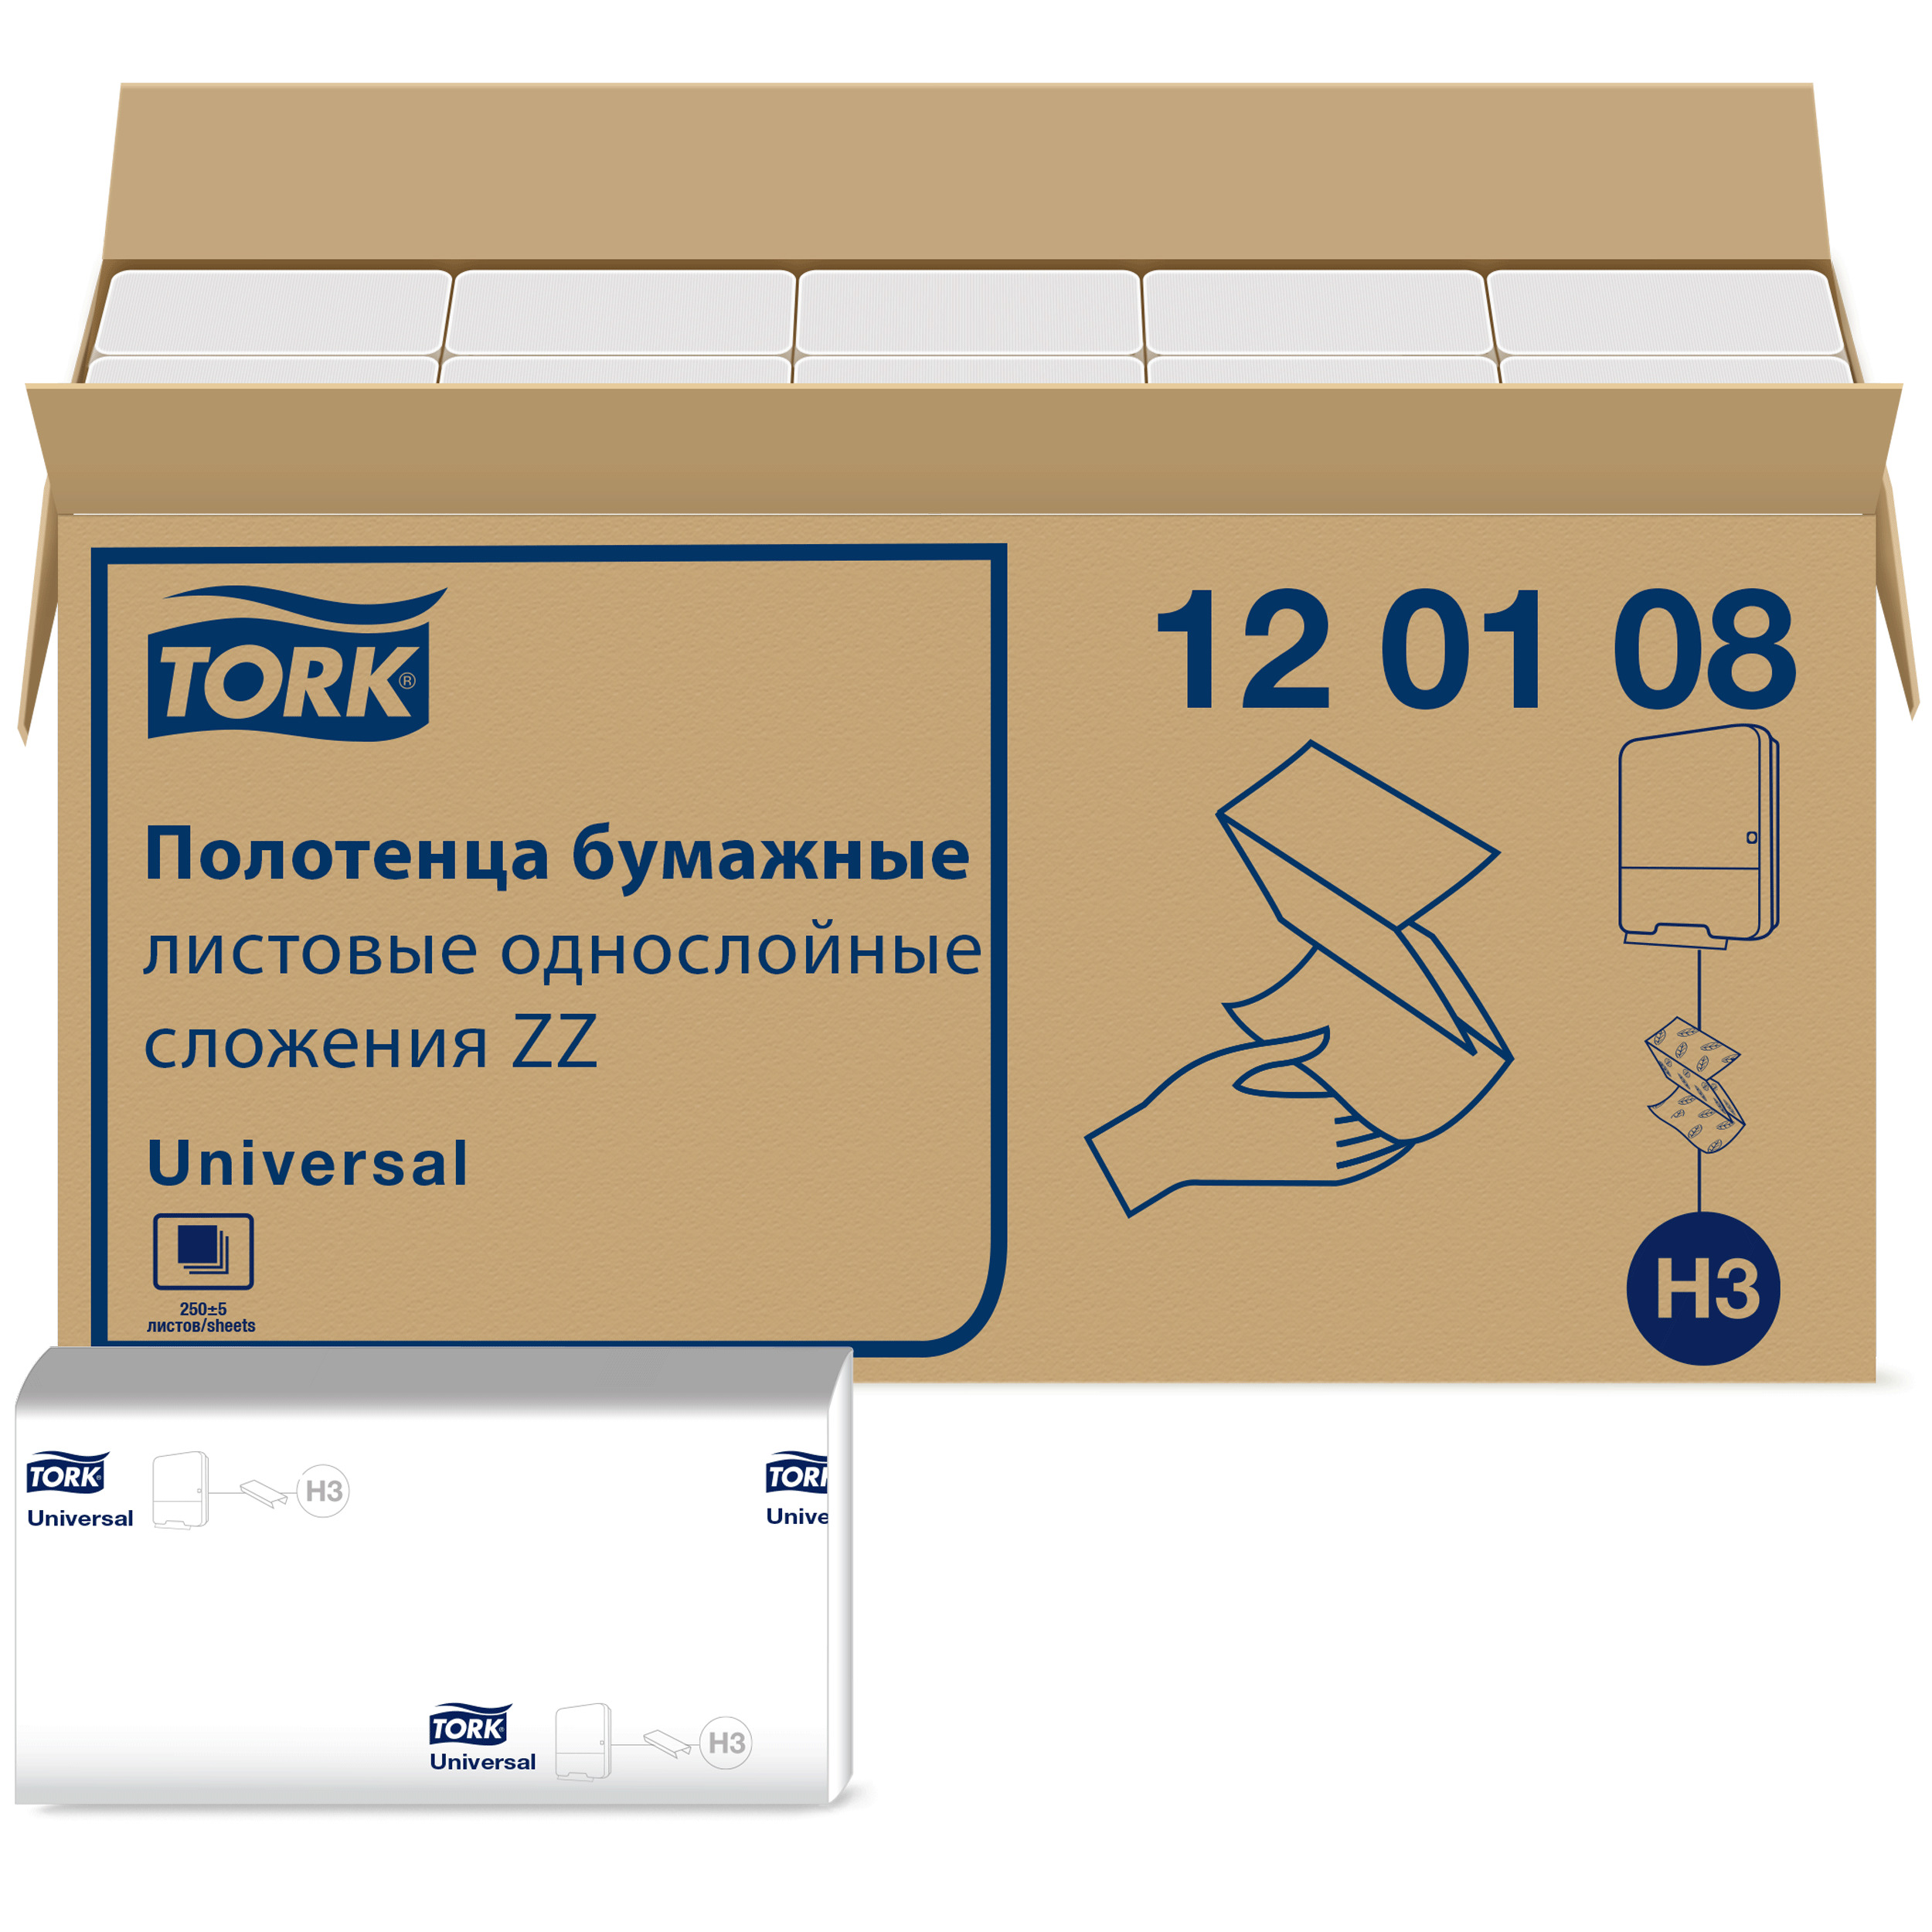 Полотенце tork сложение zz. Tork Universal 120108. Полотенца бумажные Tork Universal Singlefold 120108. Tork листовые полотенца Singlefold сложения ZZ 290184. 120108 Tork Universal листовые полотенца сложение ZZ система h3.